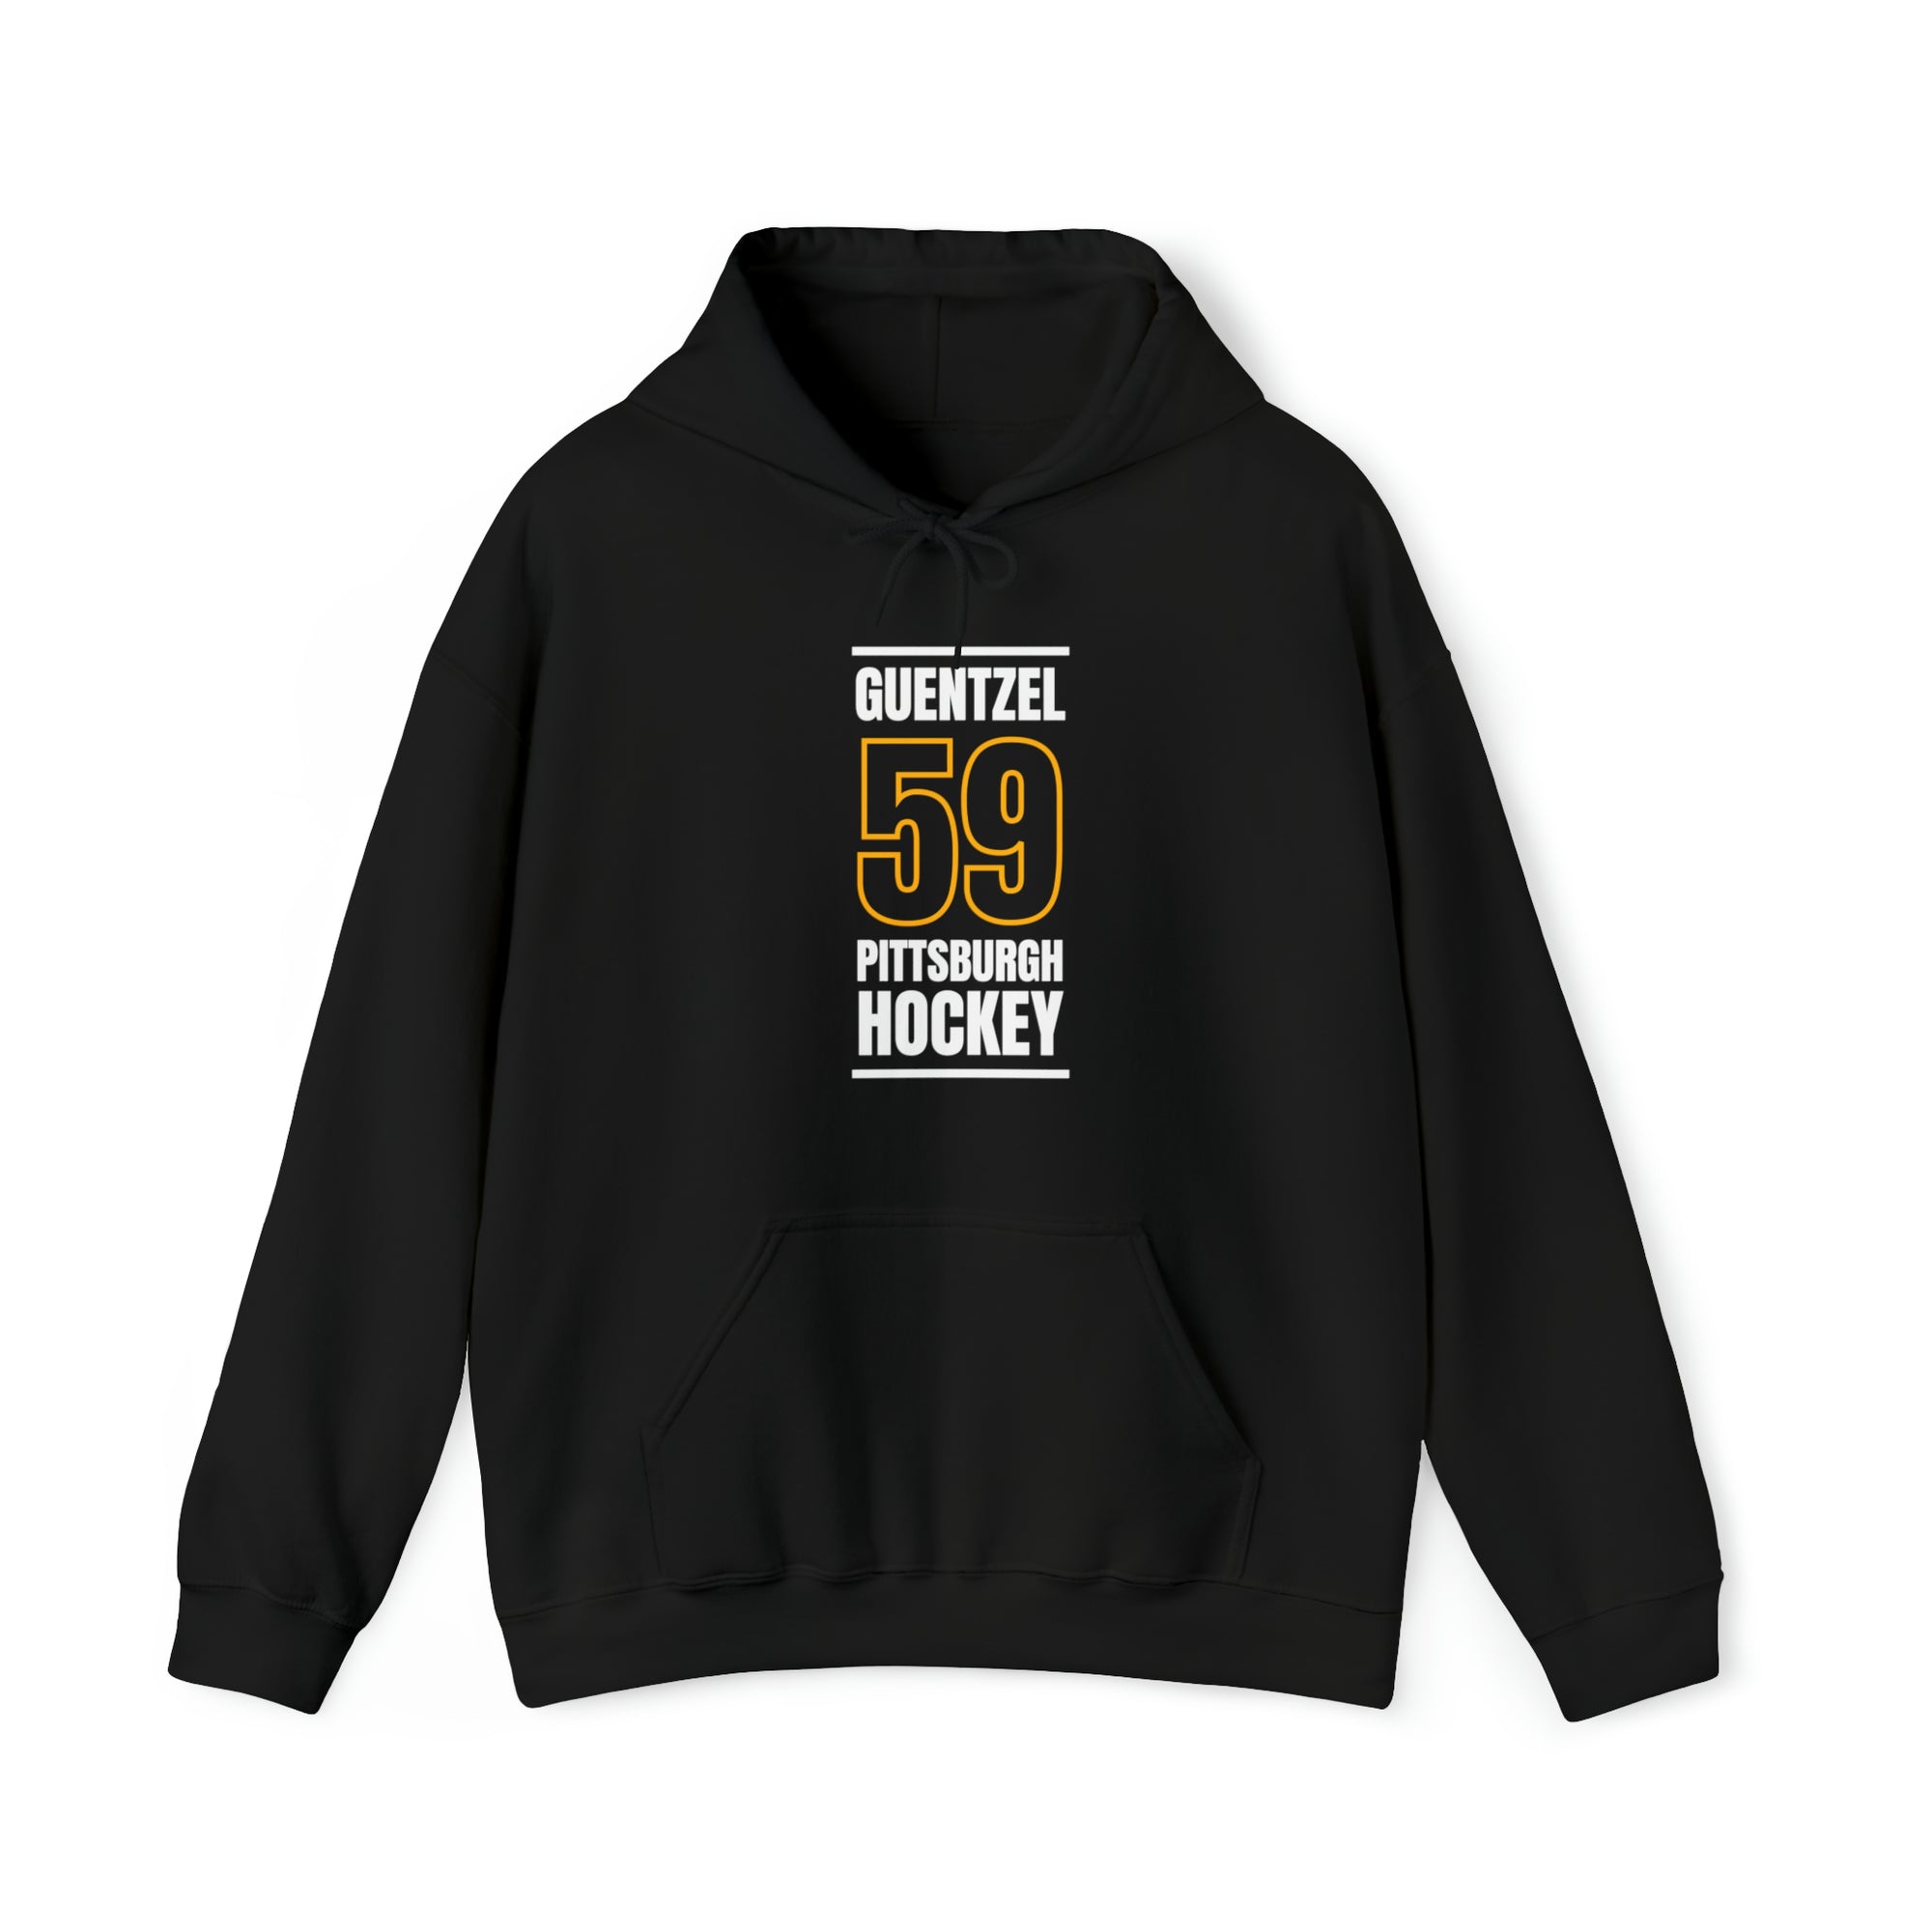 Guentzel 59 Pittsburgh Hockey Black Vertical Design Unisex Hooded Sweatshirt